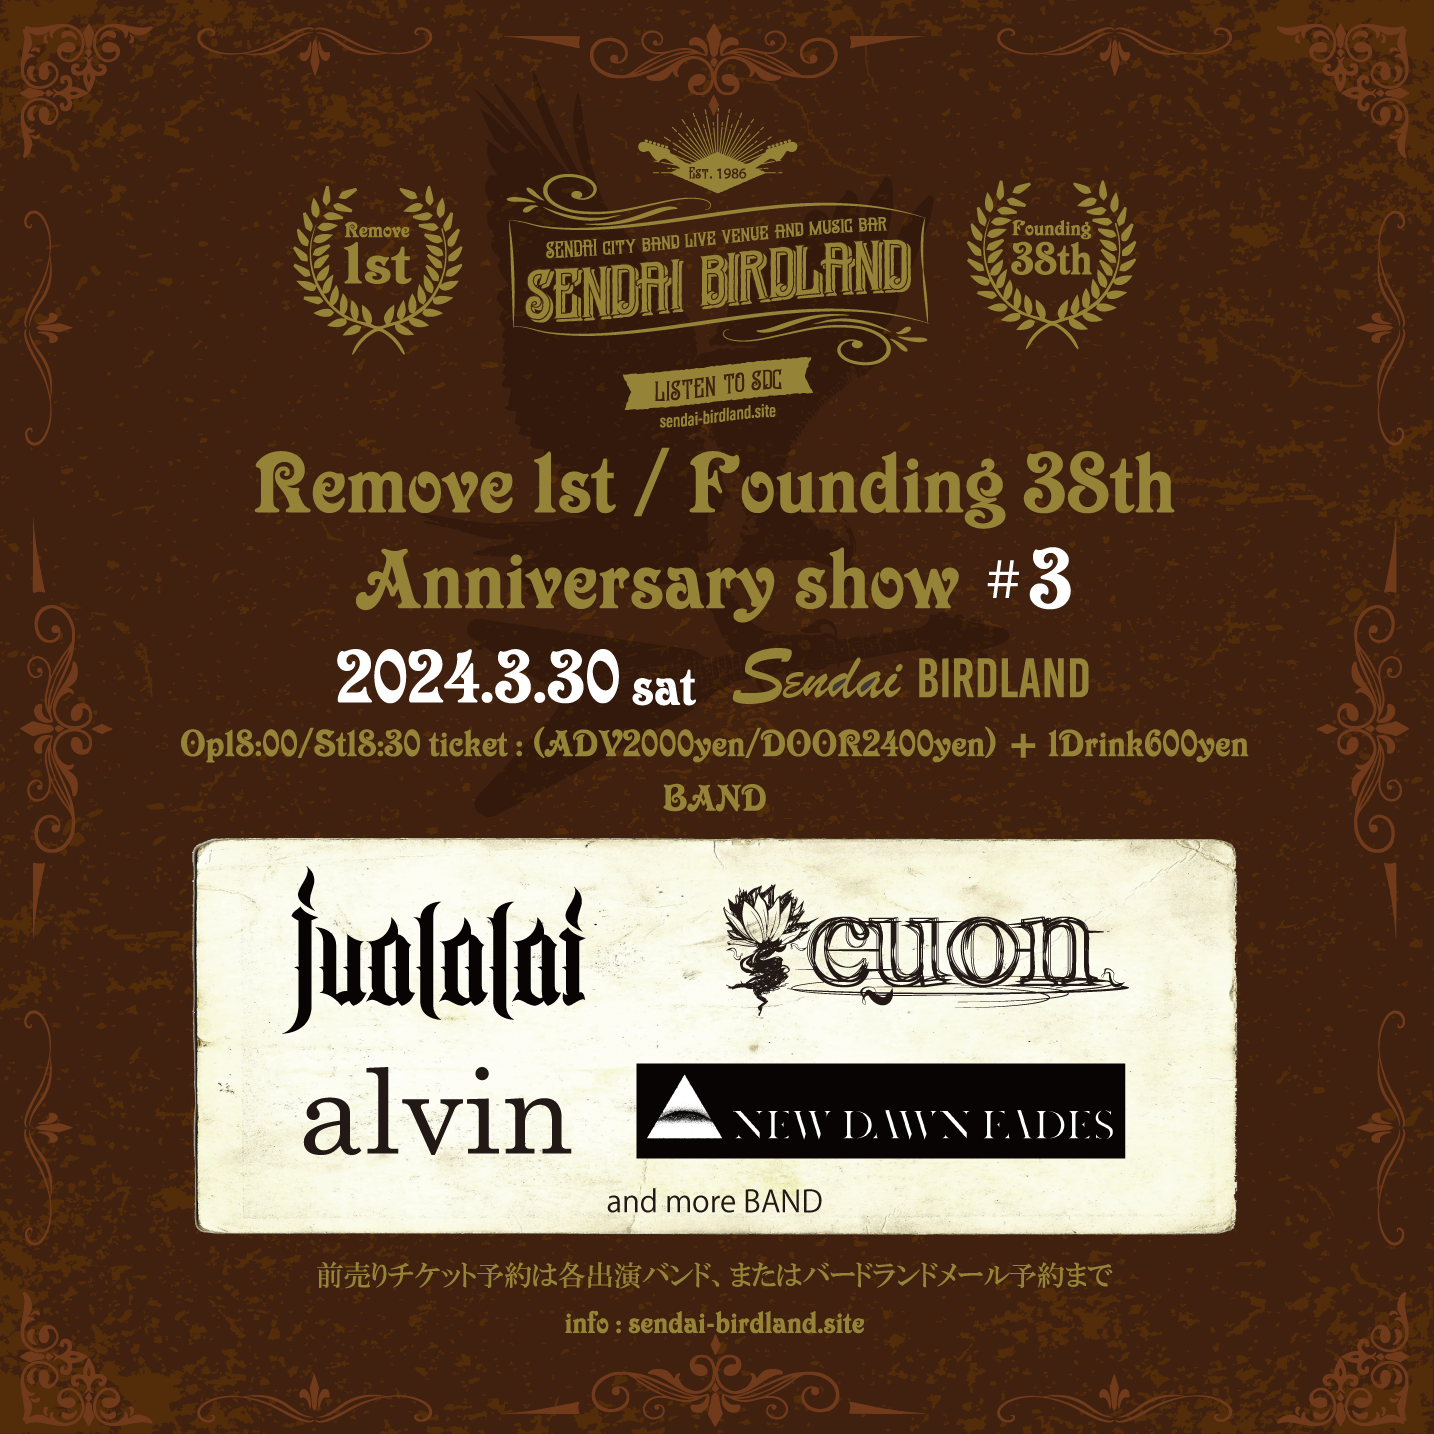 SENDAI-BIRDLAND Remove 1st / Founding 38th Anniversary show #3